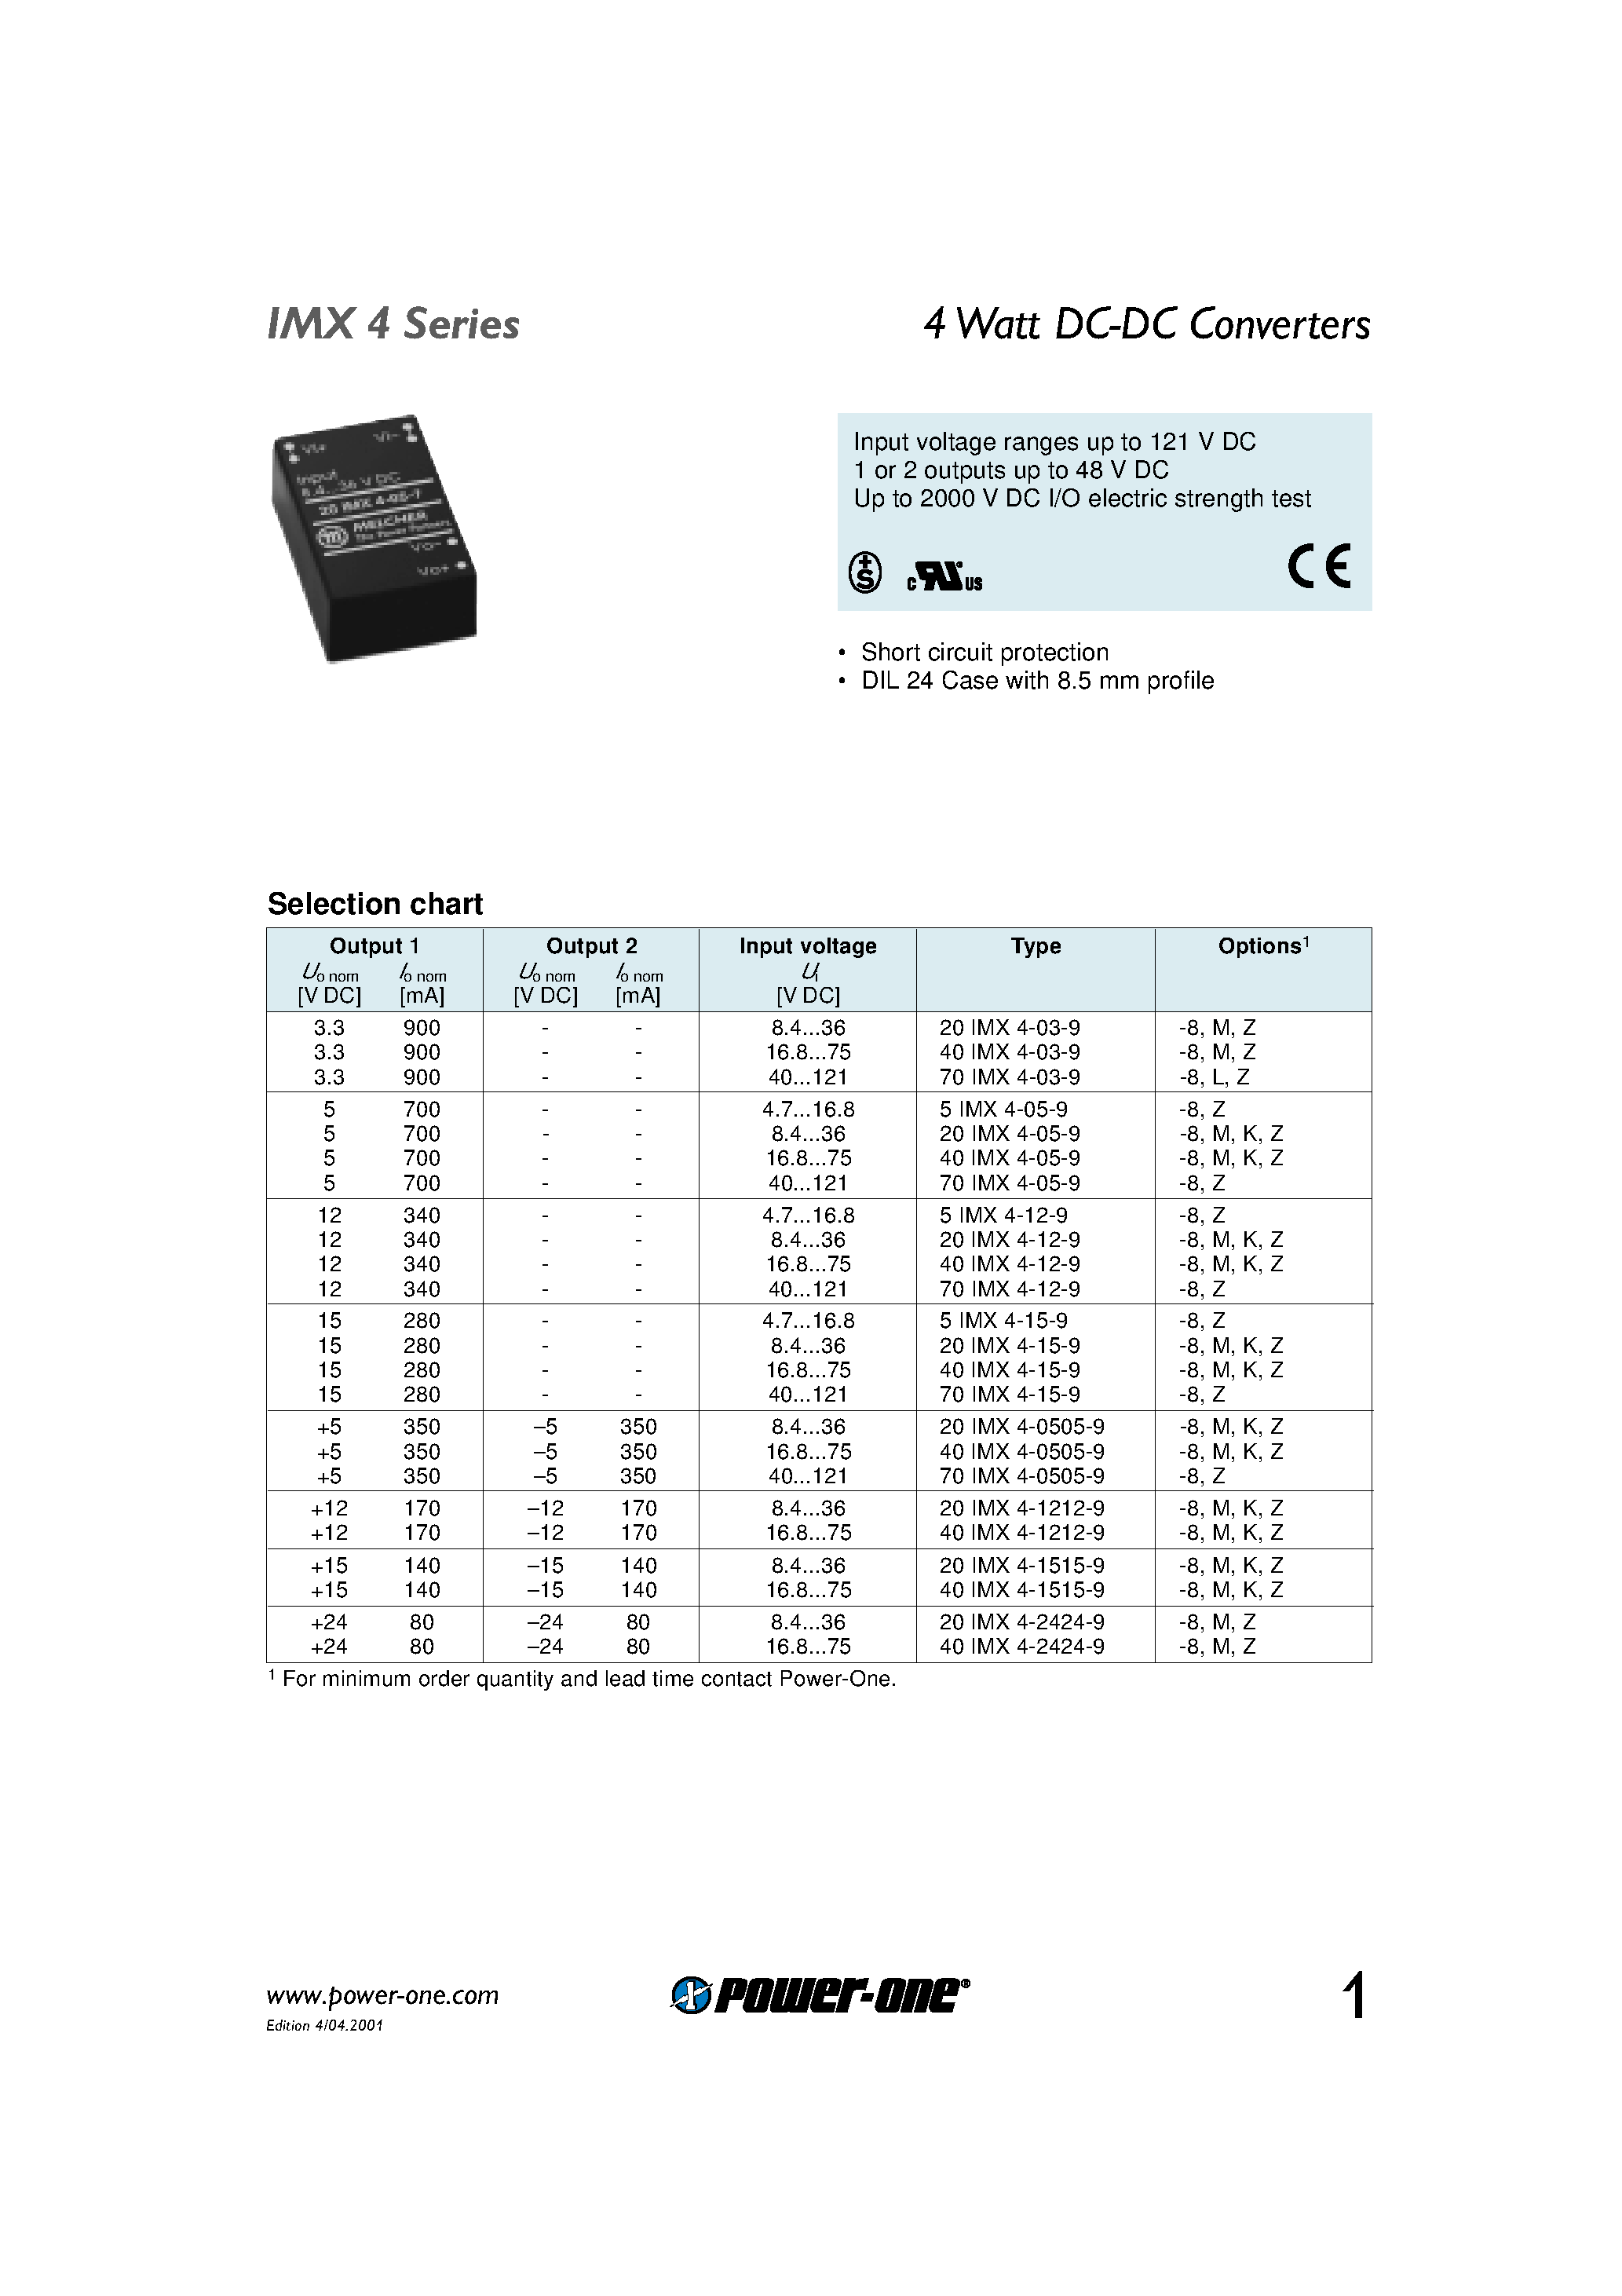 Datasheet 40IMX4-0505-9 - 4 Watt DC-DC Converters page 1